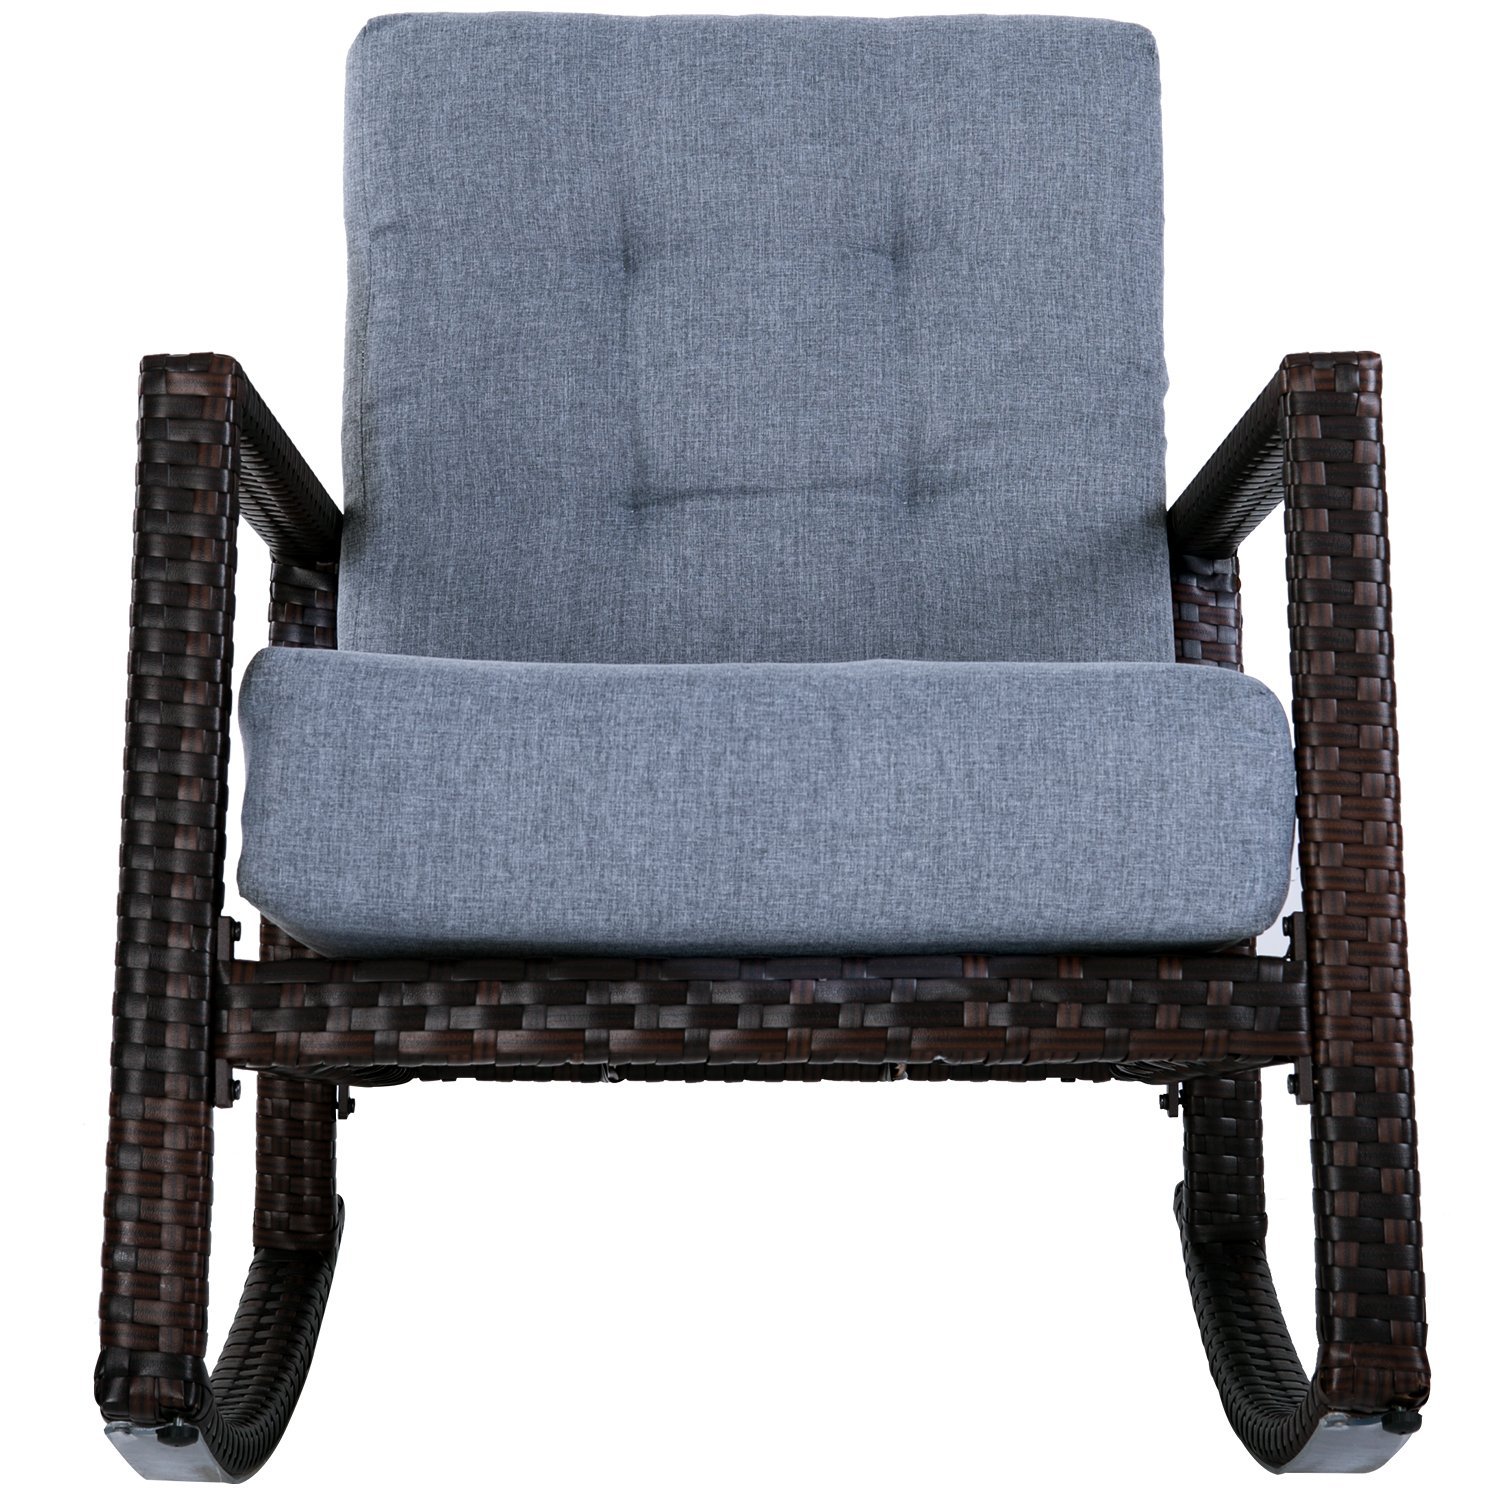 Merax Cushioned Rattan Rocker Chair Patio Glider Lounge Wicker Chair with Cushion(Grey Cushion) - image 3 of 3